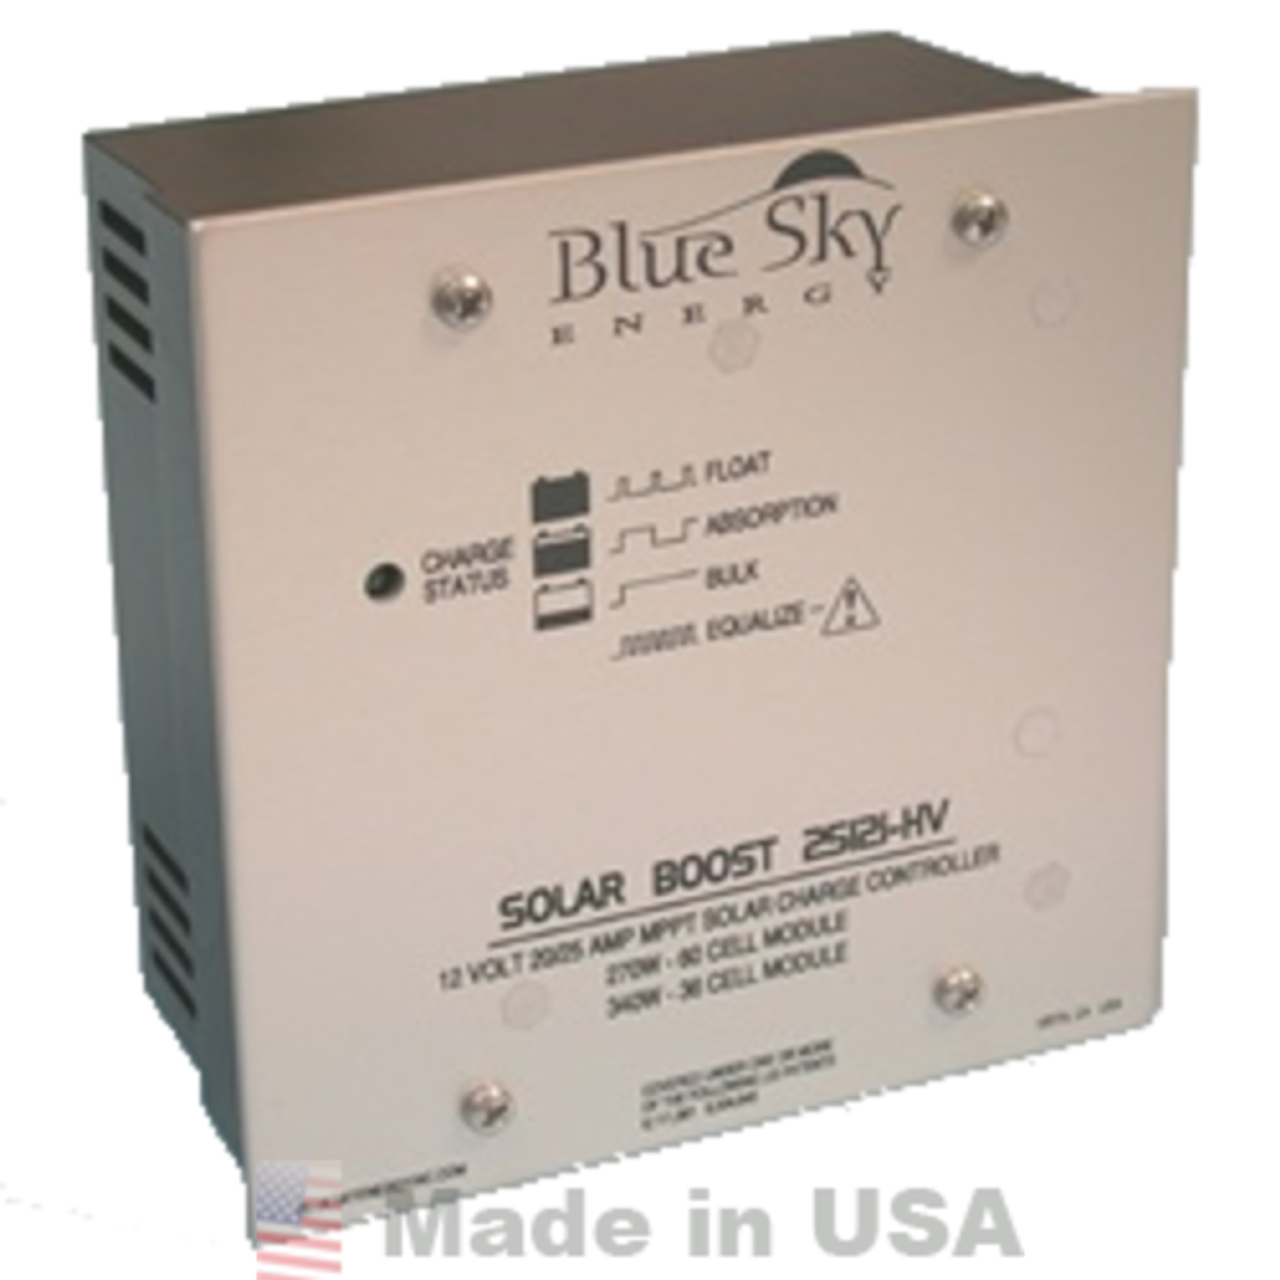 Blue Sky Solar Boost 2512i-HV MPPT Solar Charge Controller, 25A, 12V